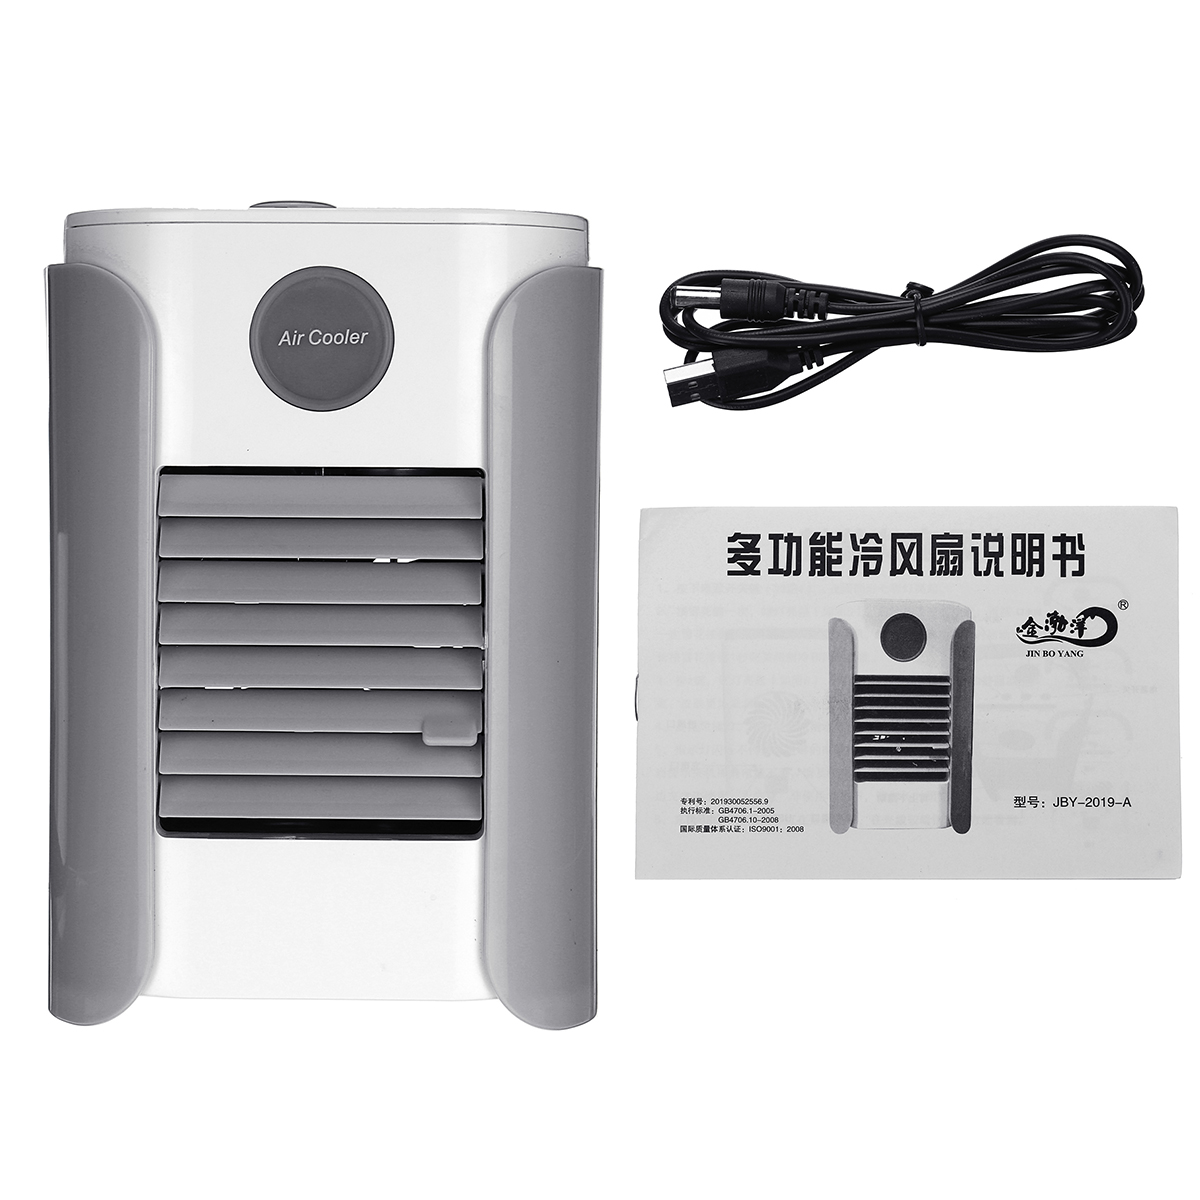 Multi-function-Air-Conditioner-Cooler-Fan-Humidifier-bluetooth-FM-Radio-Speaker-1519139-10